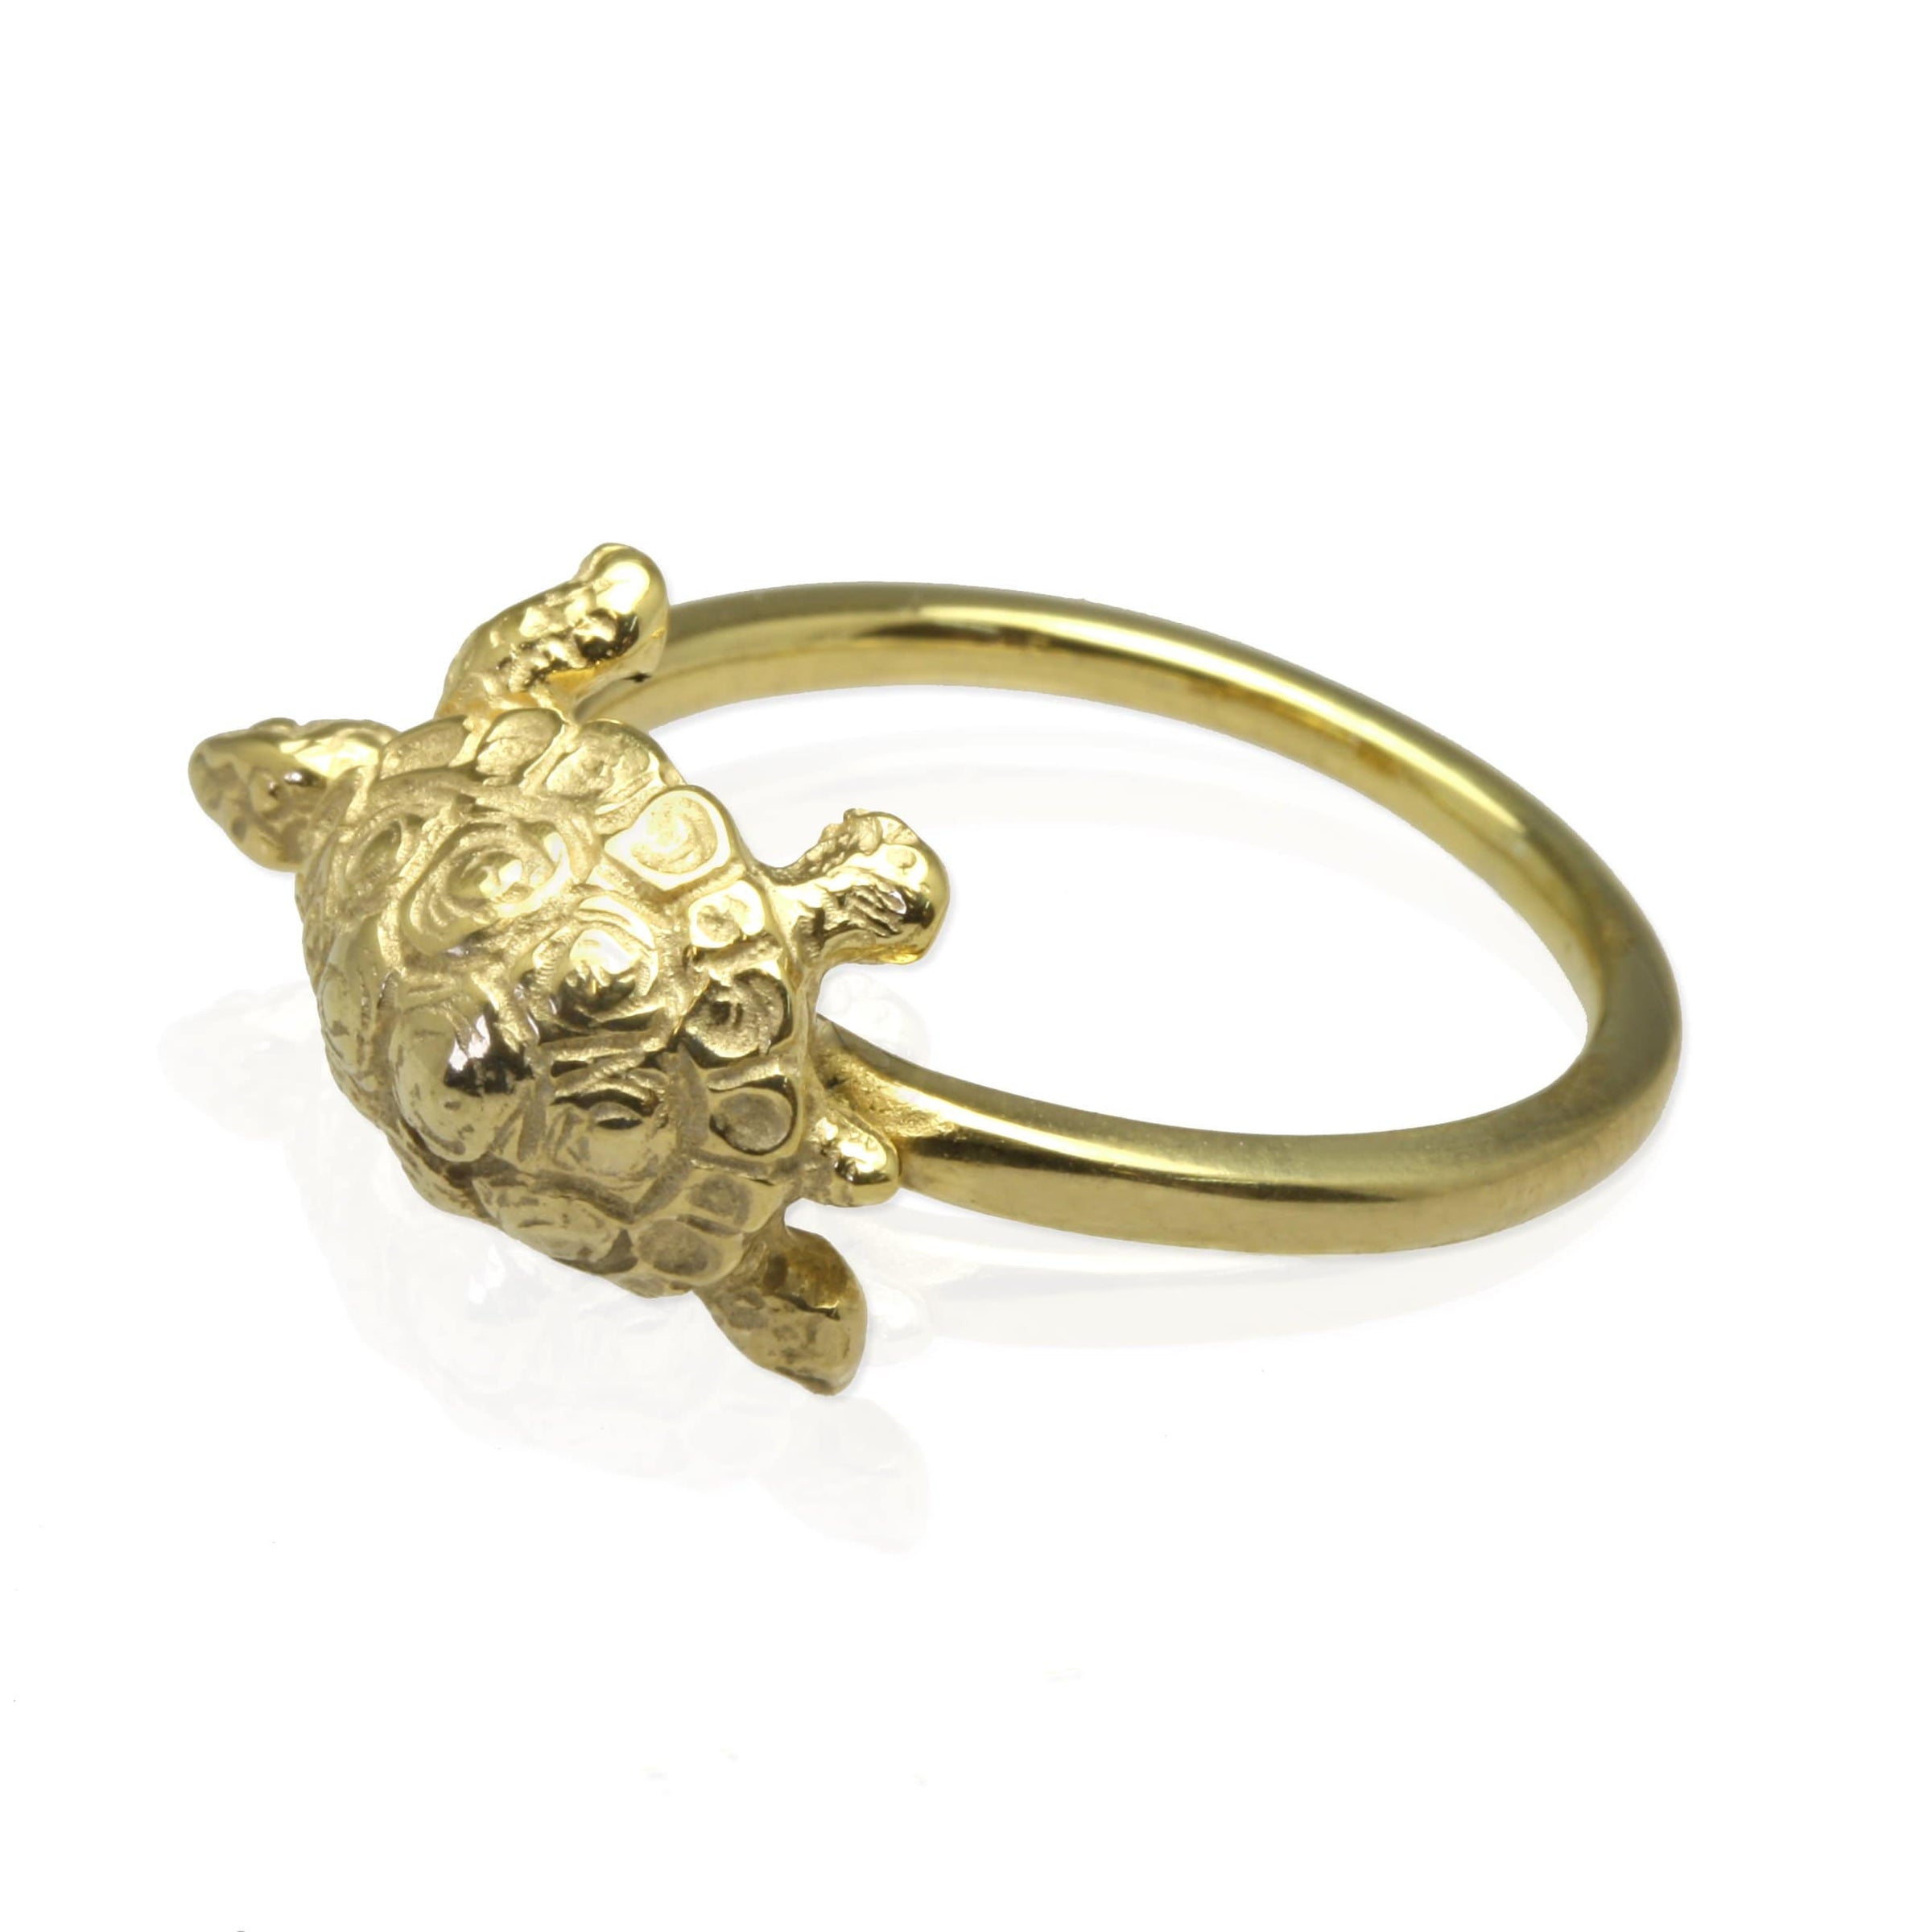 Buy ASTROGHAR Shree Yantra Engraved Meru Kachua Hand Kraft Tortoise Ring  for Men and Women at Amazon.in